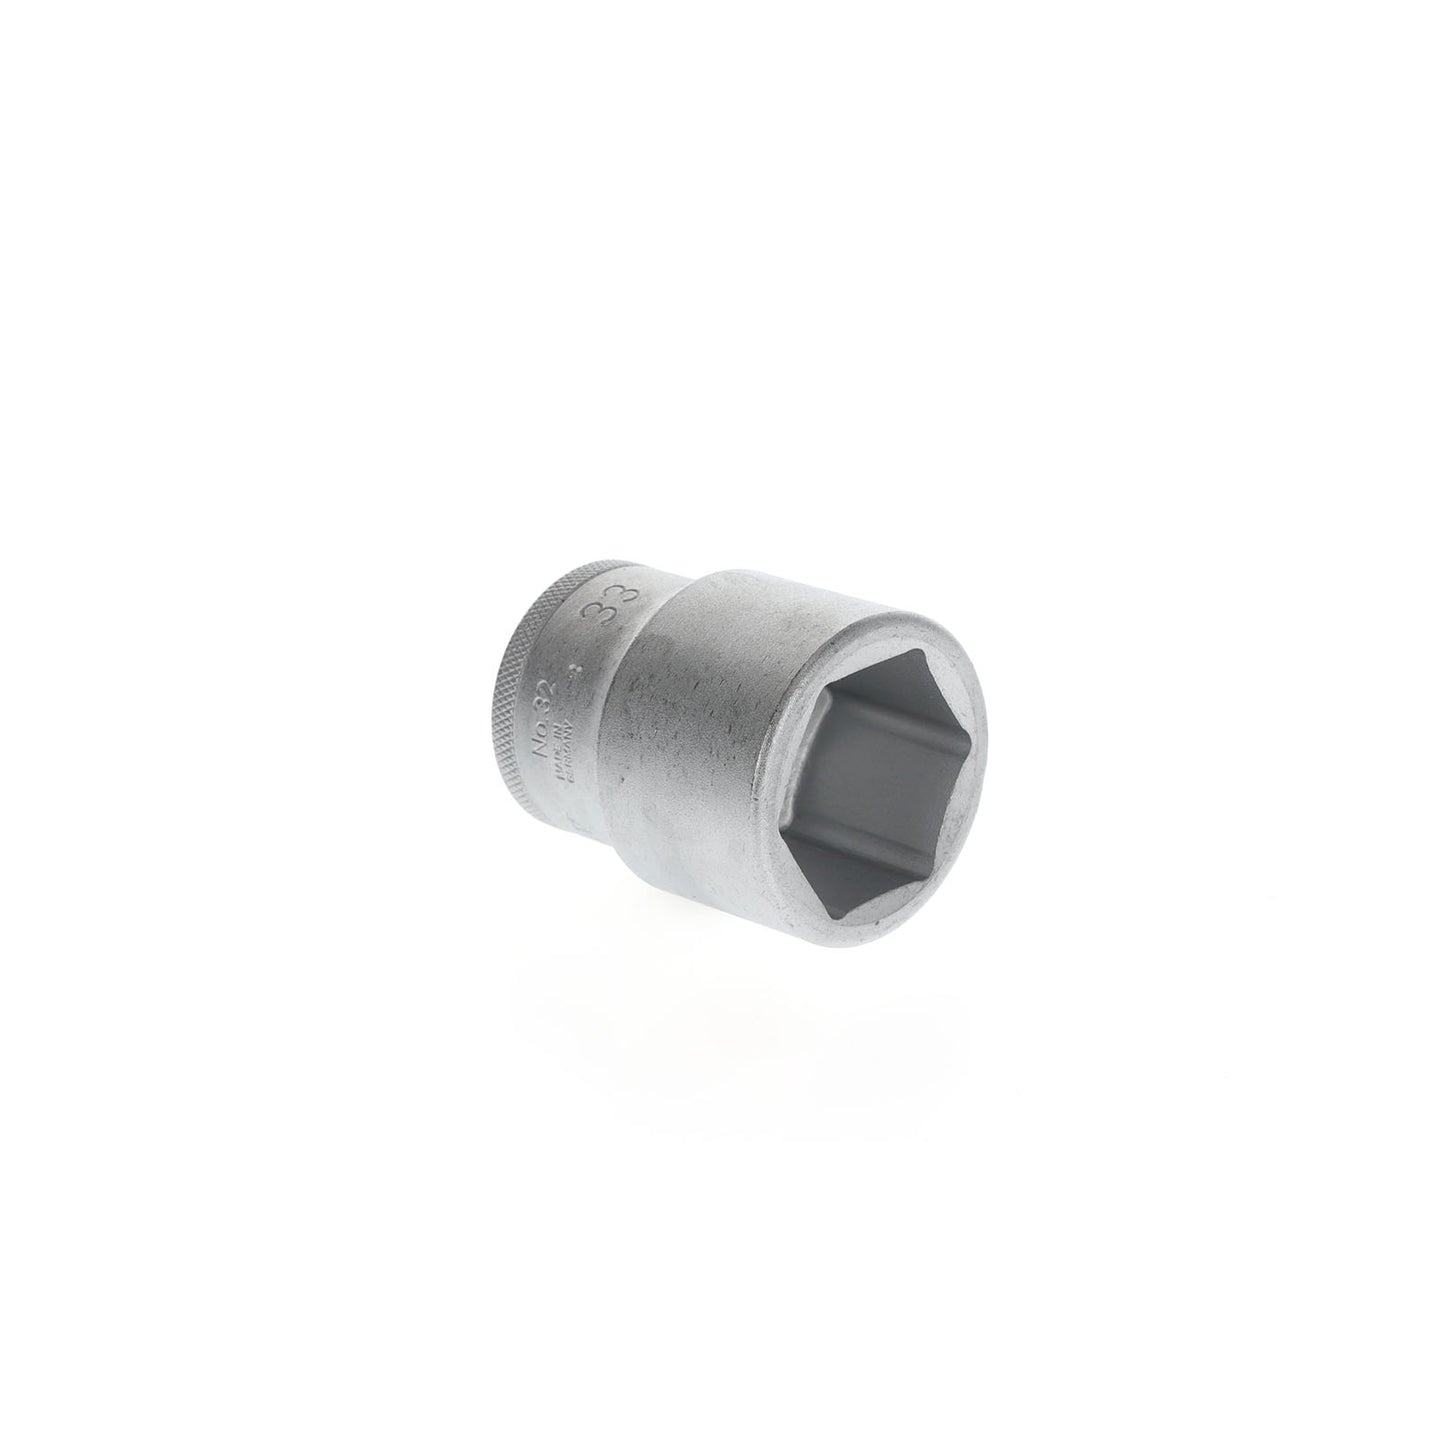 GEDORE 32 33 - Hexagonal socket 3/4", 33 mm (6270030)